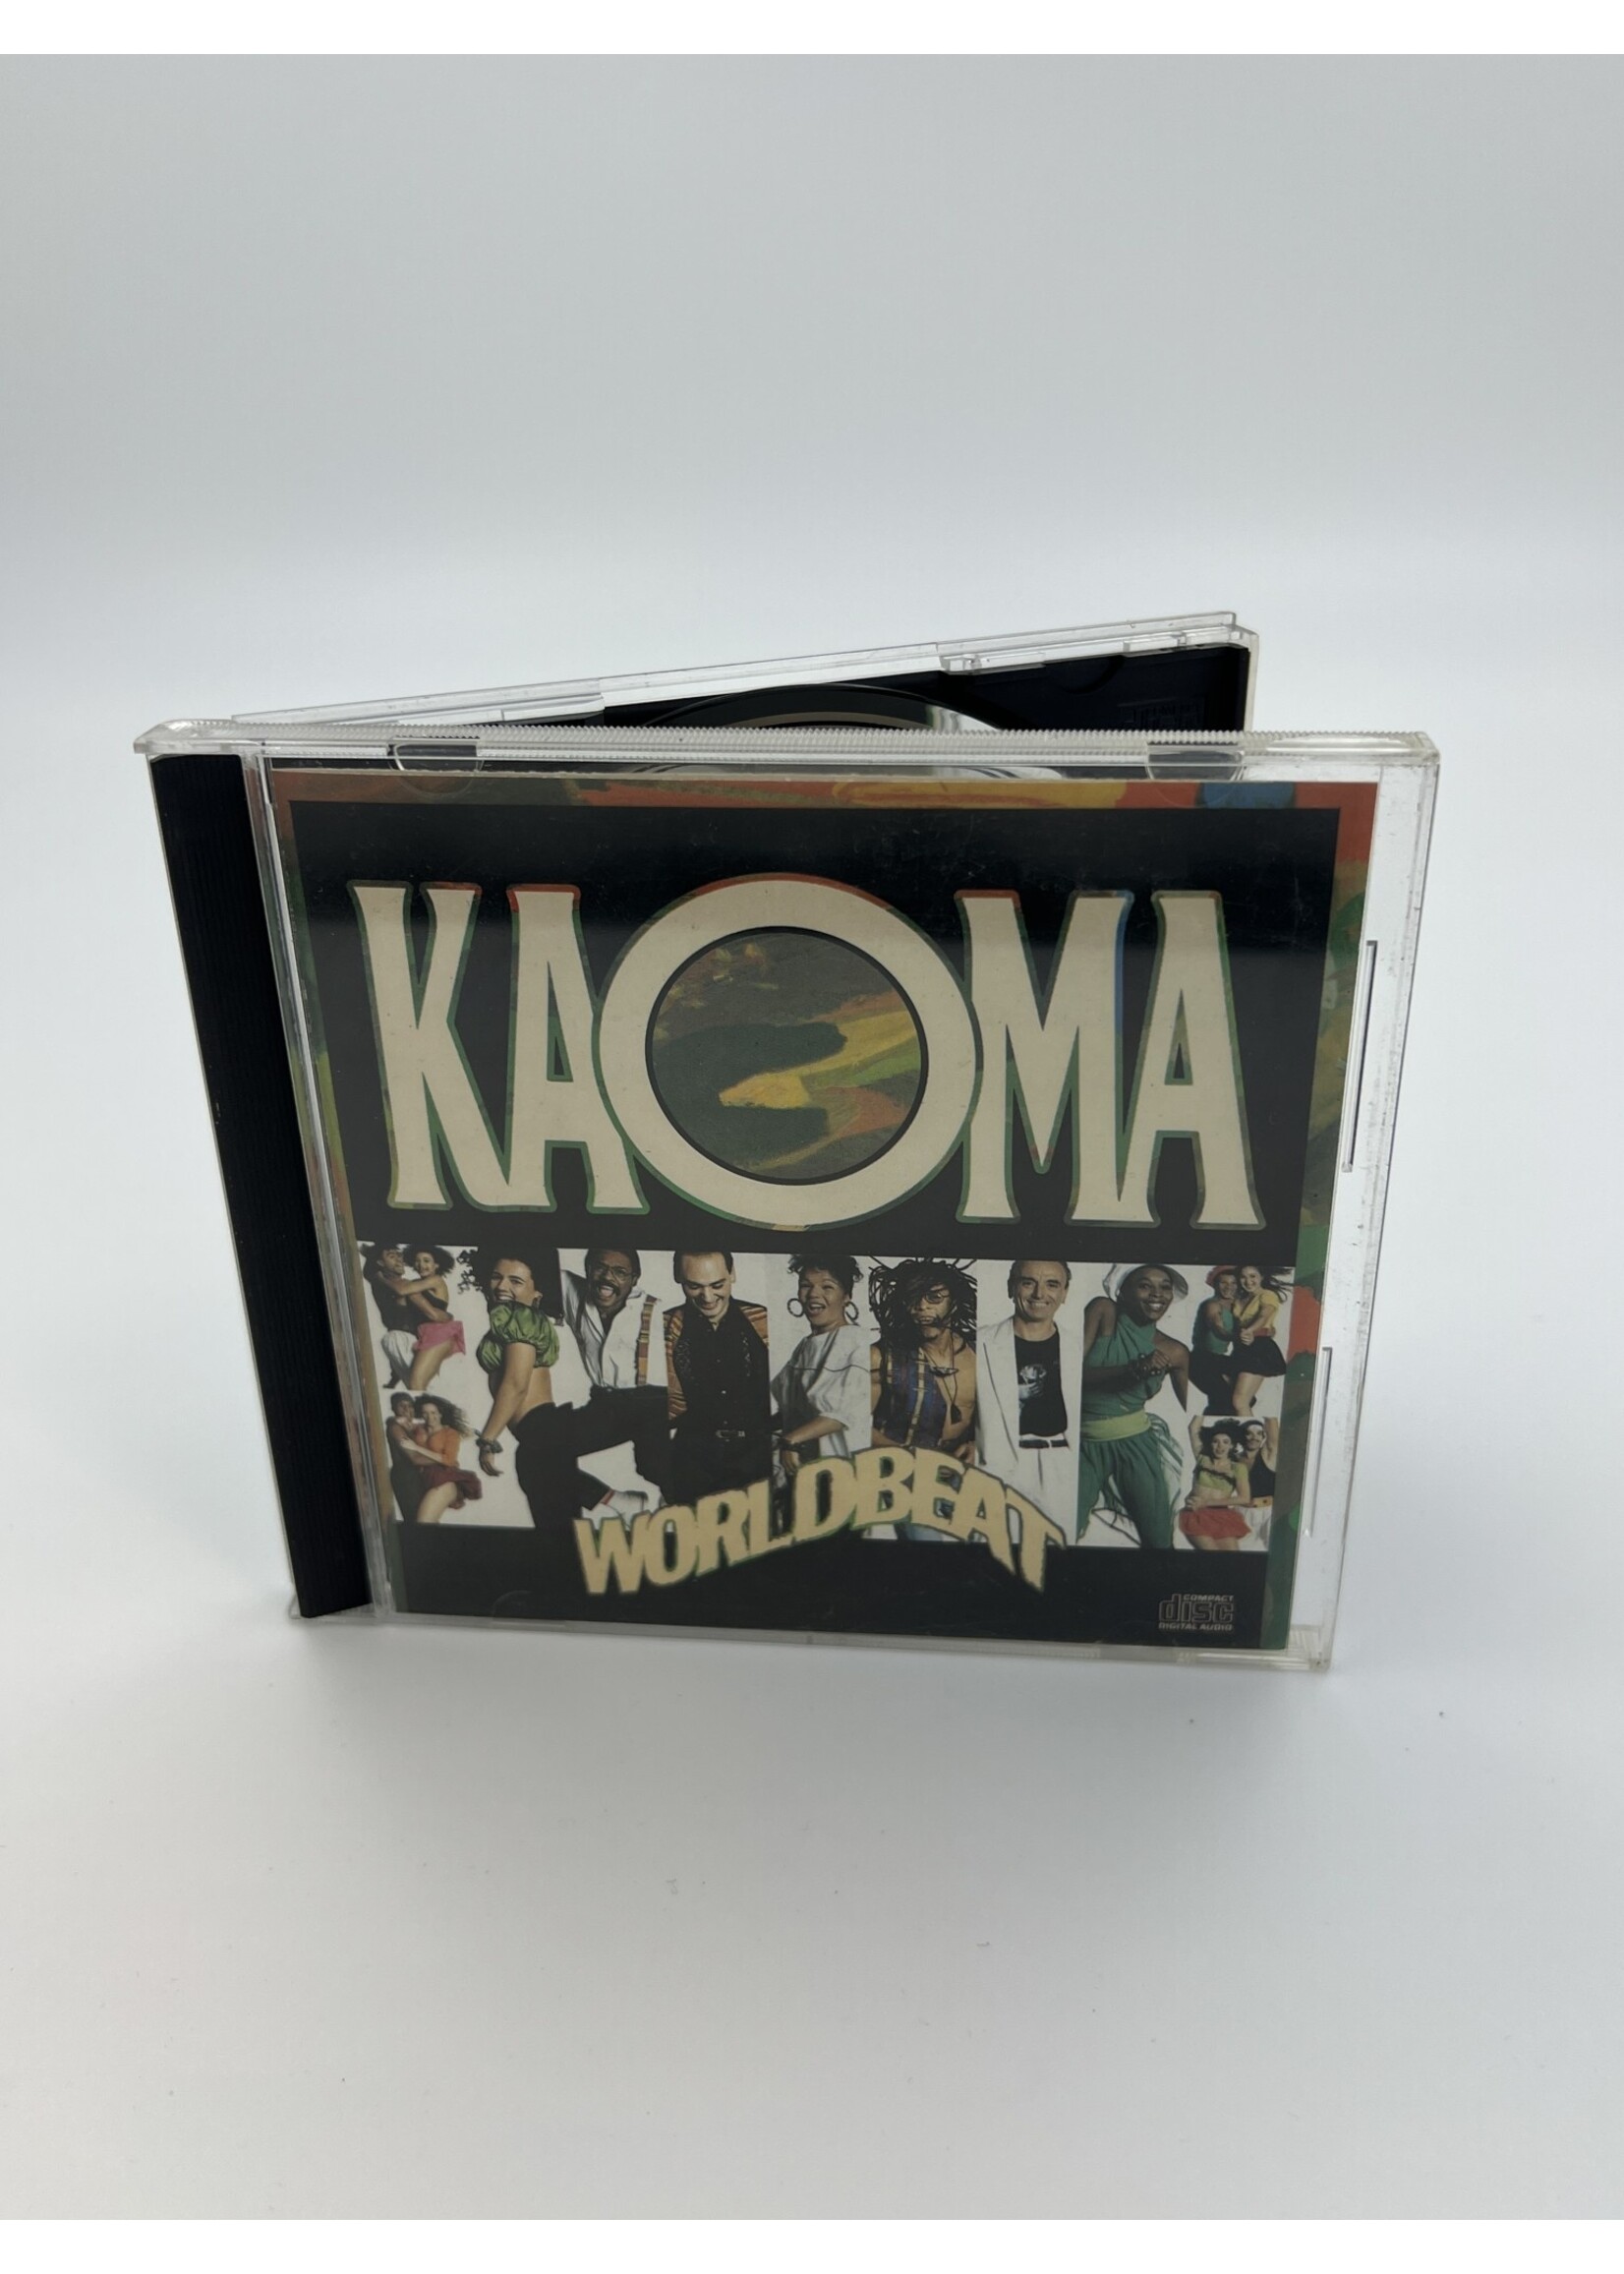 CD   Kaoma World Beat CD